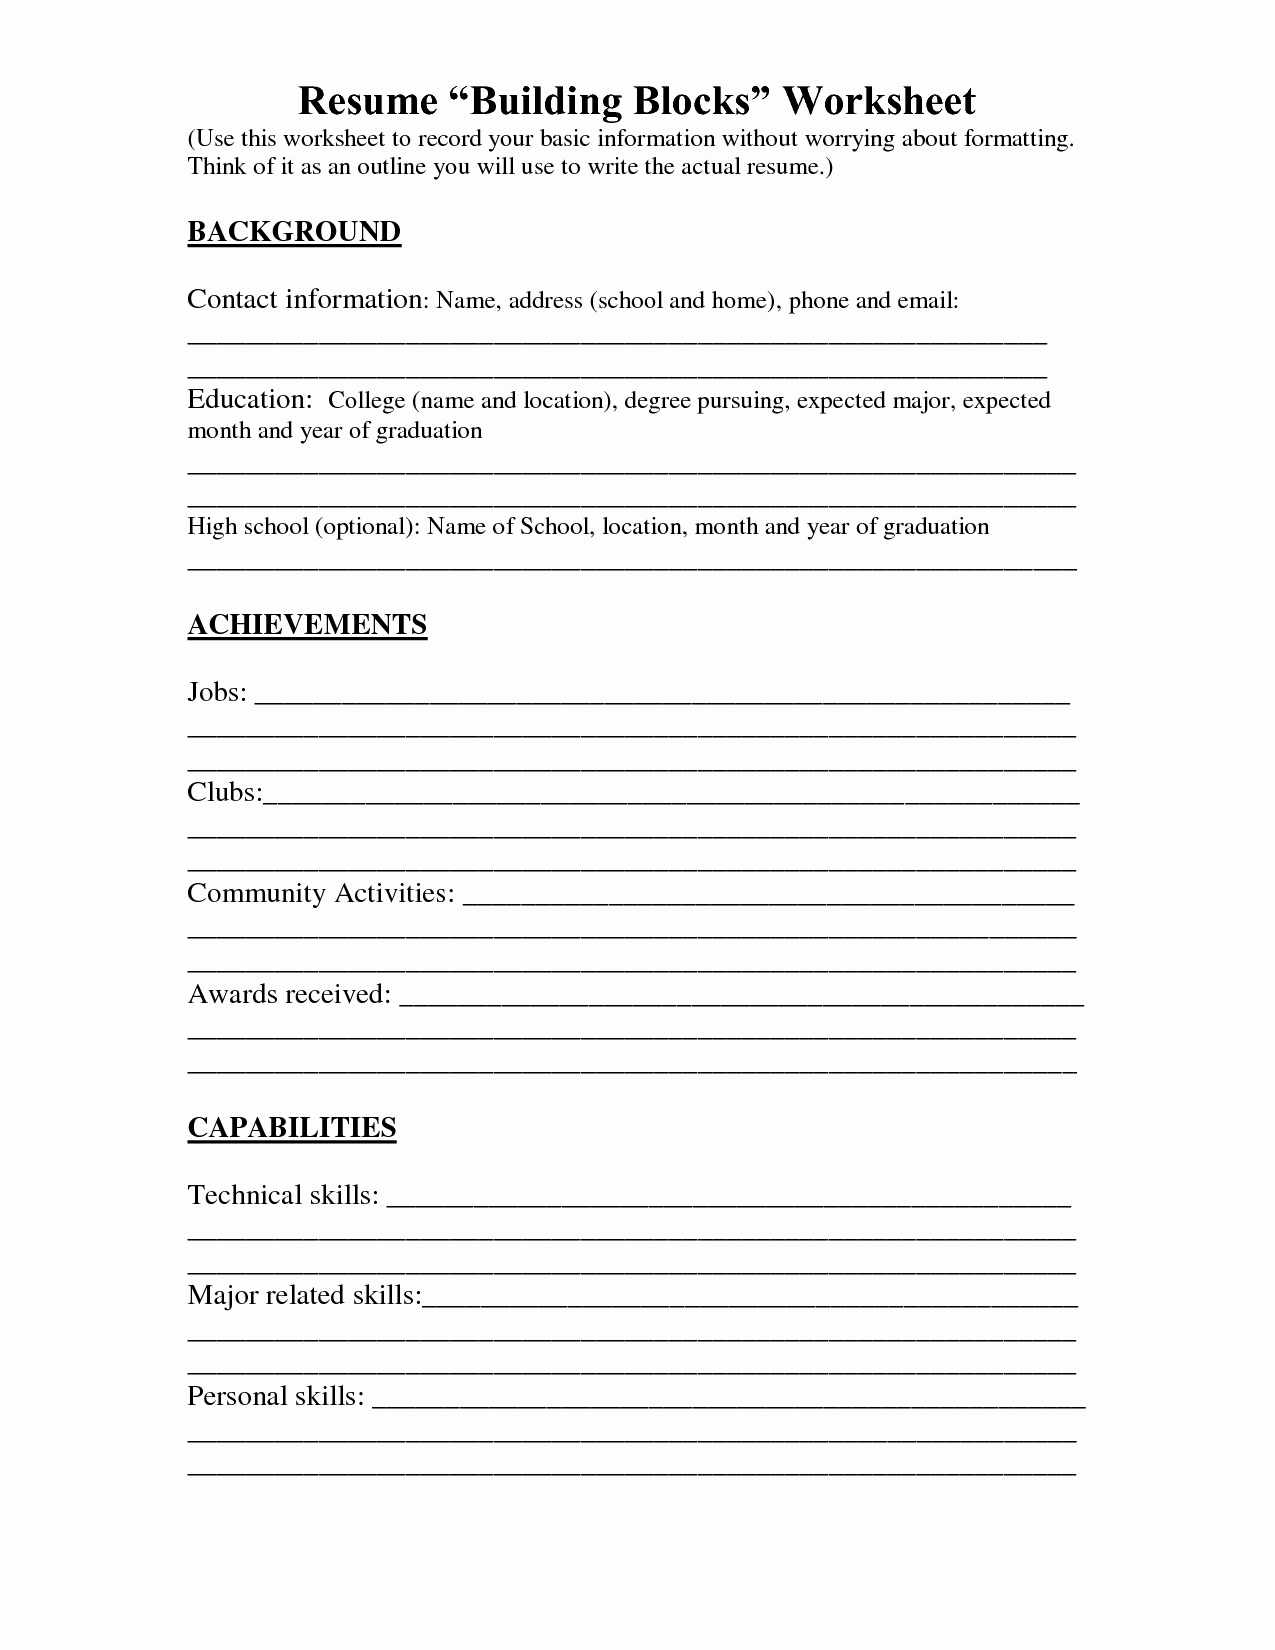 High School Resume Builder Lovely Resume Worksheet Printable and High School Builder Free